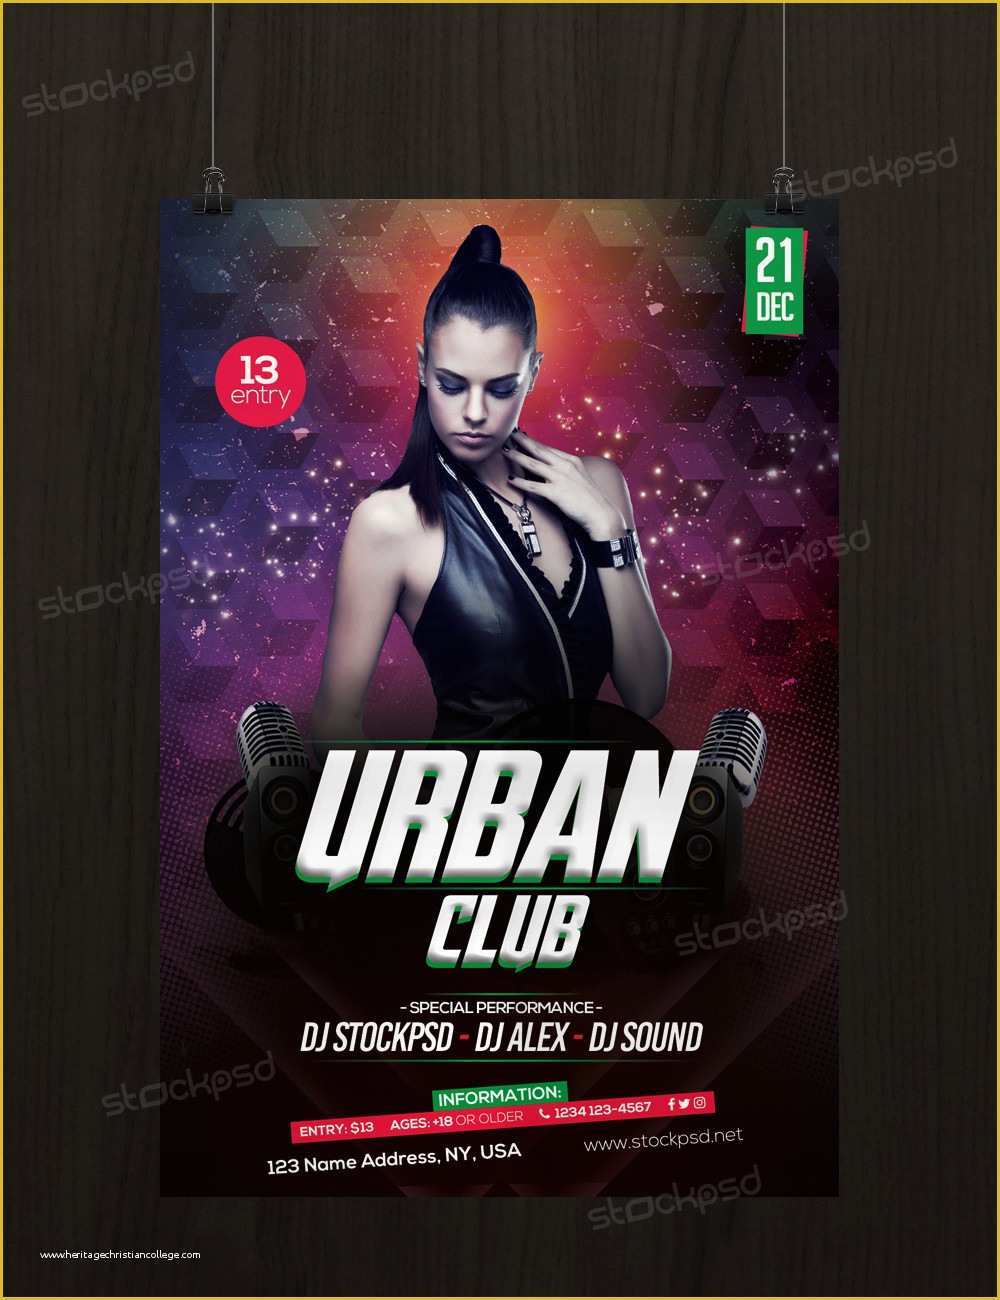 Free Nightclub Flyer Templates Of Urban Club Download Free Psd Flyer Template Stockpsd